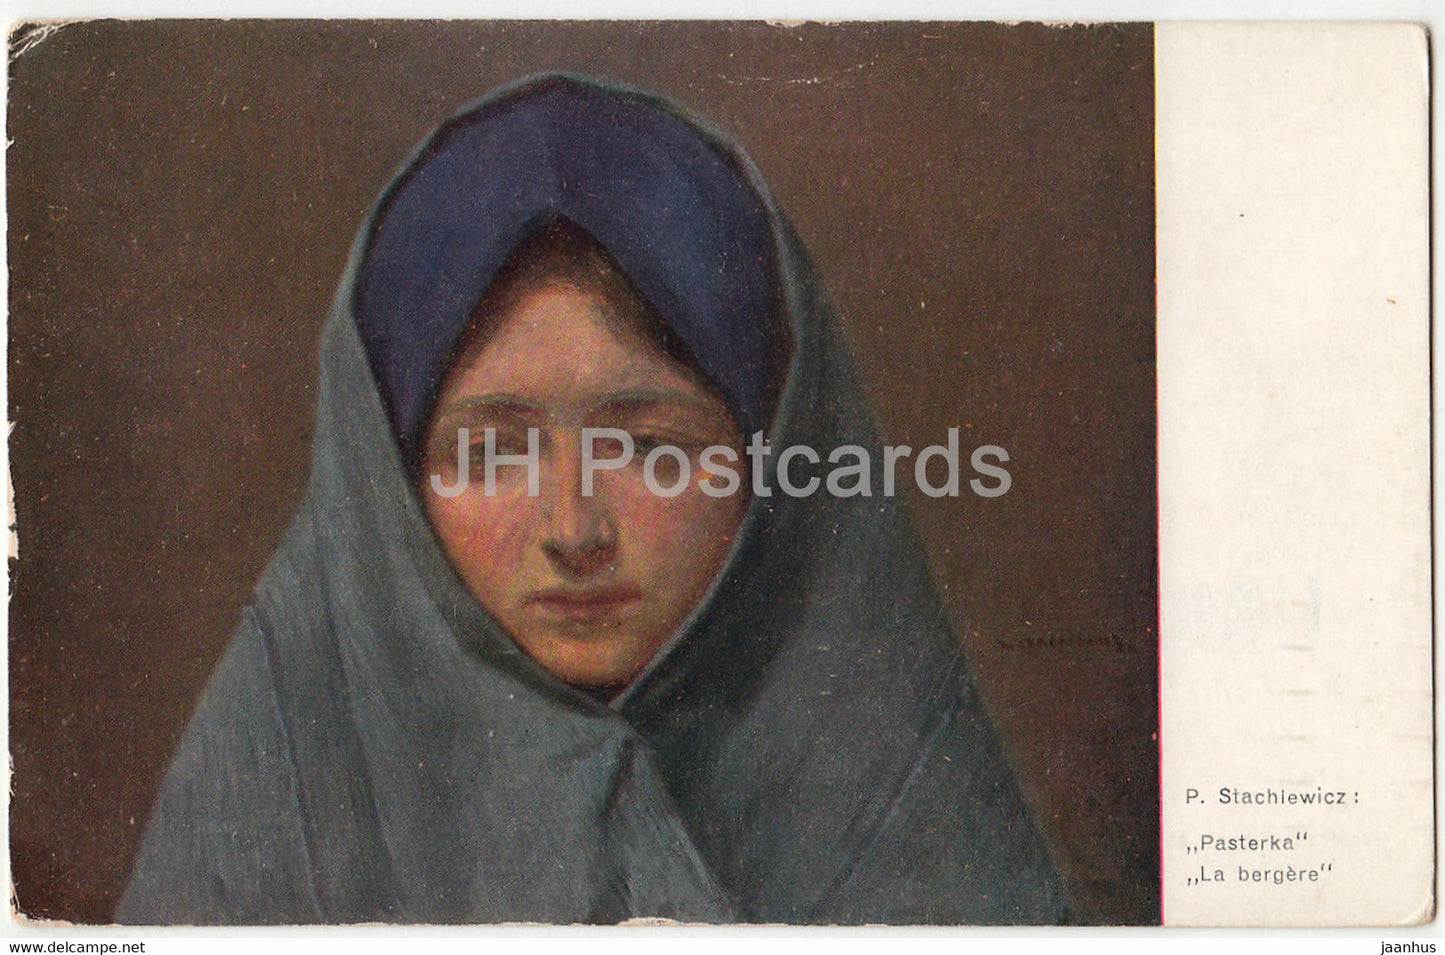 painting by Piotr Stachiewicz - Pasterka - La bergere - Shepherdess - 21 - Polish art - old postcard - Poland - unused - JH Postcards